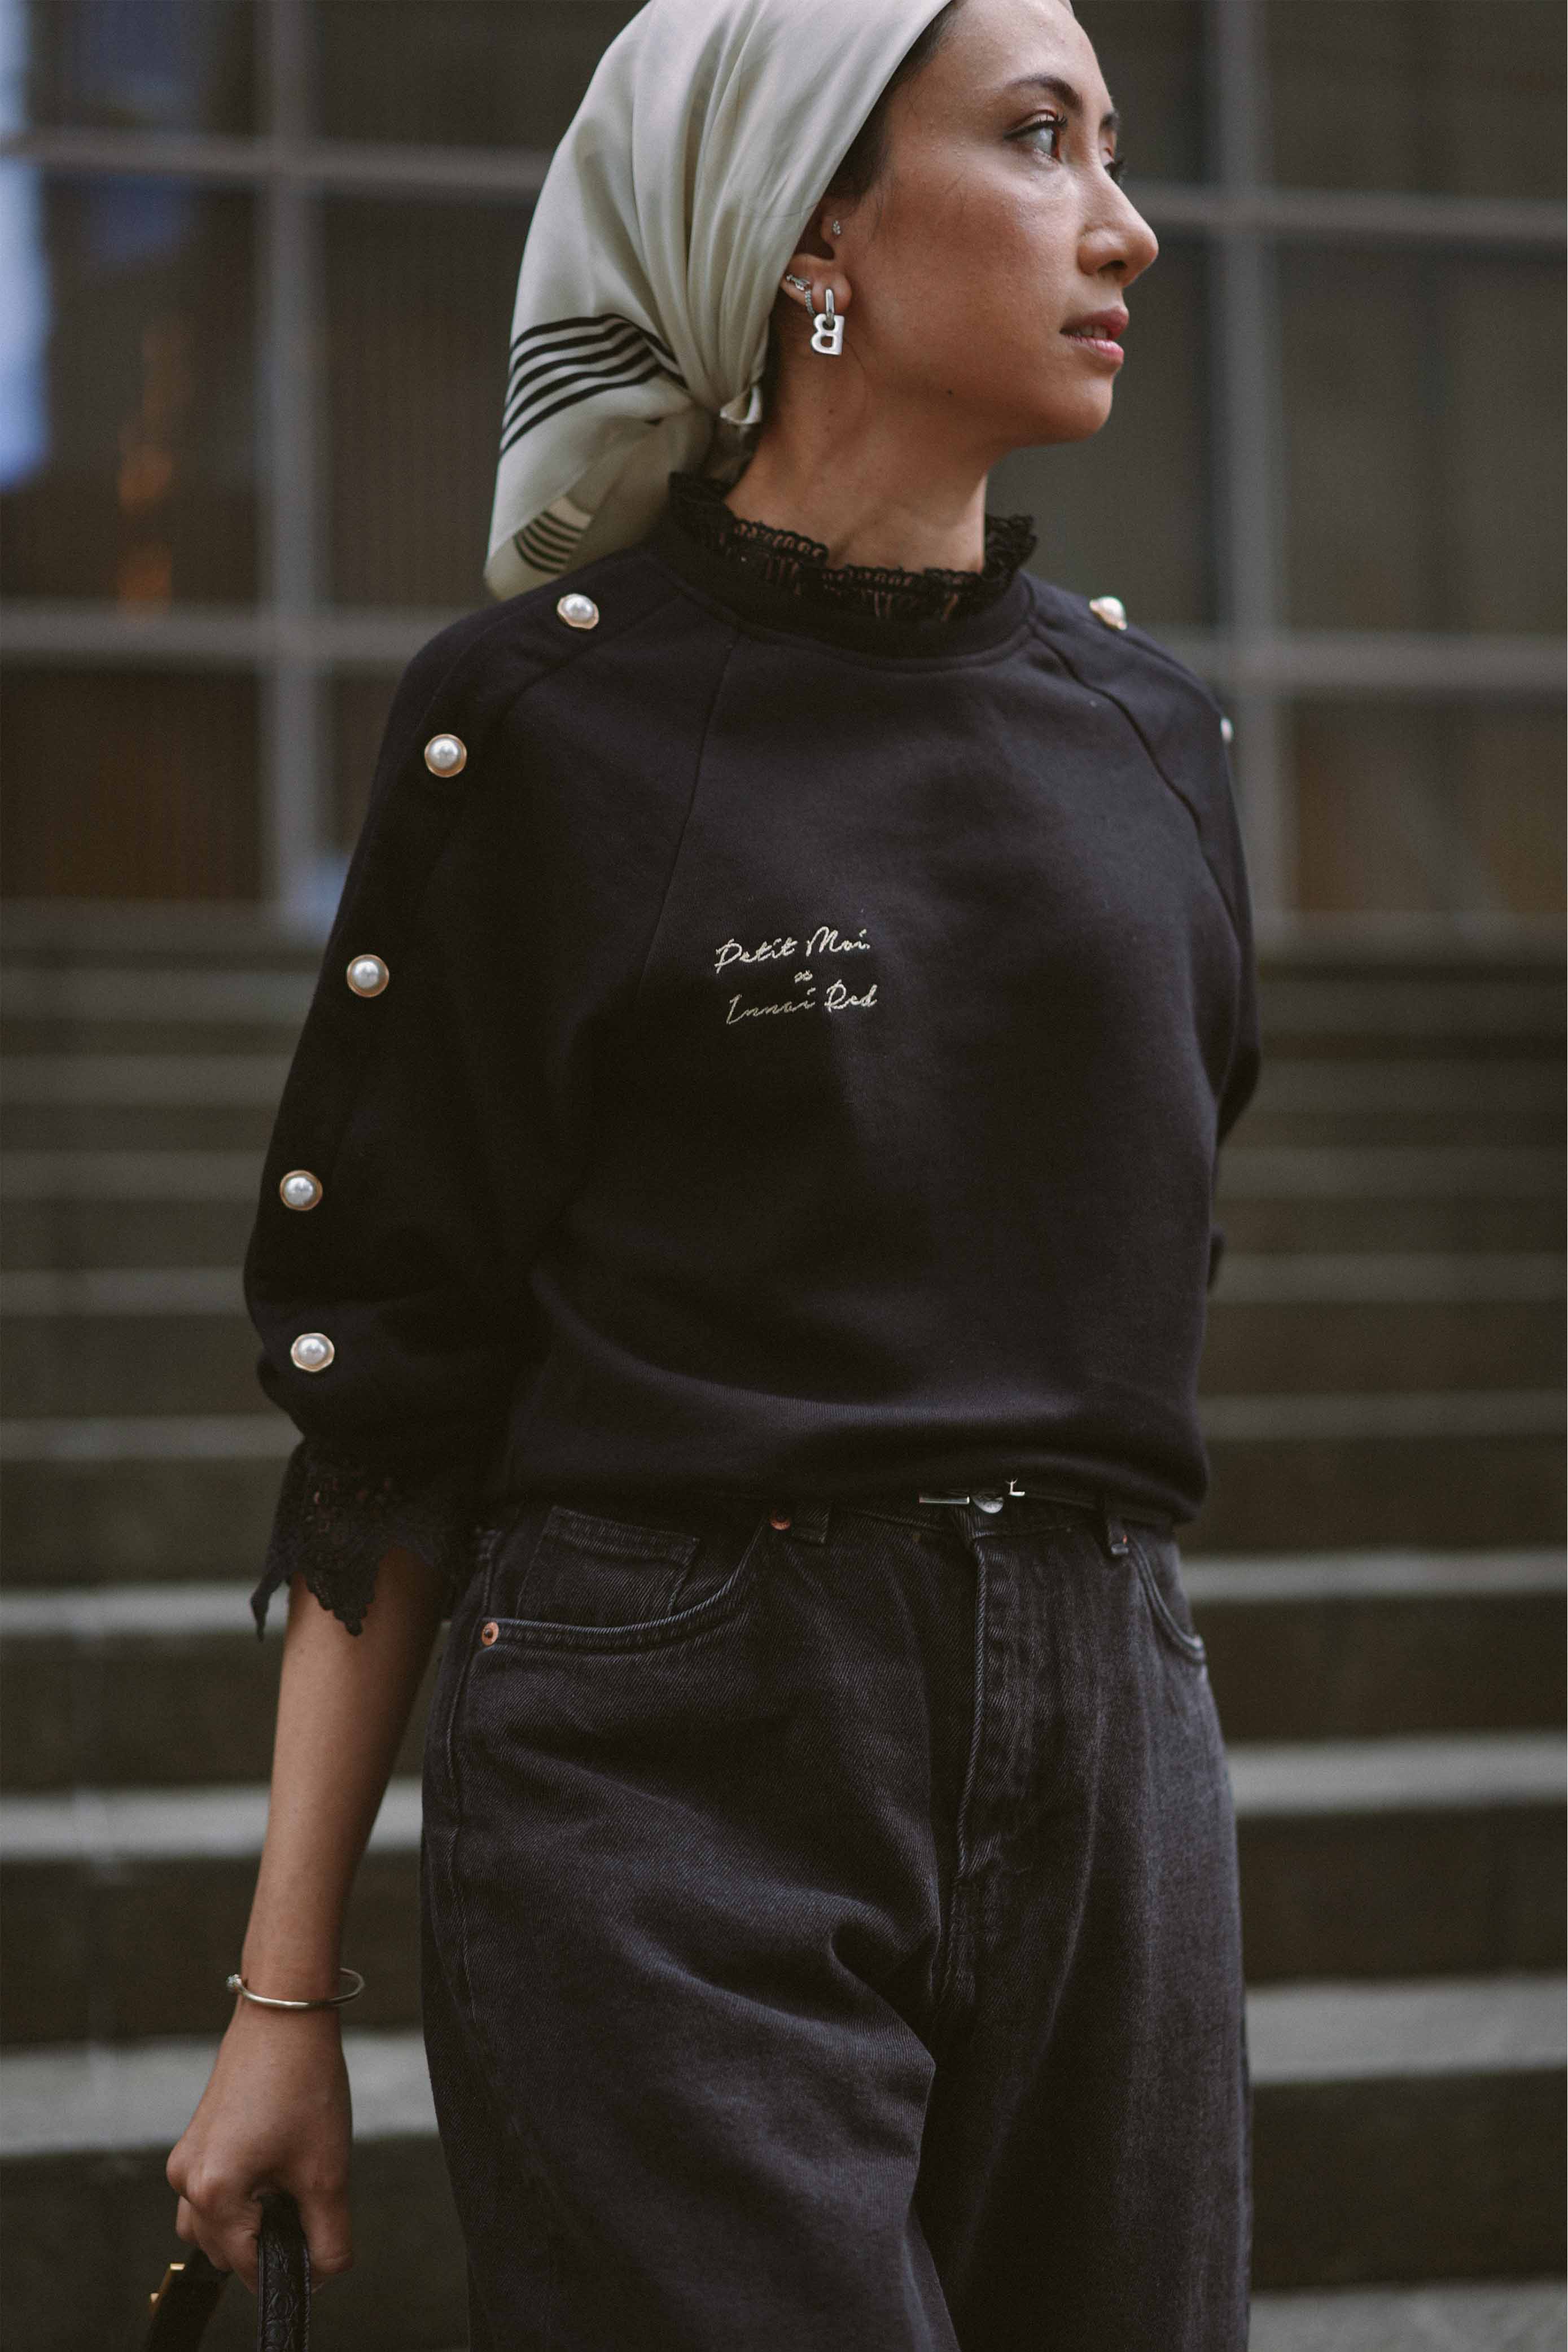 Female model wearing black jumper designed by petit moi